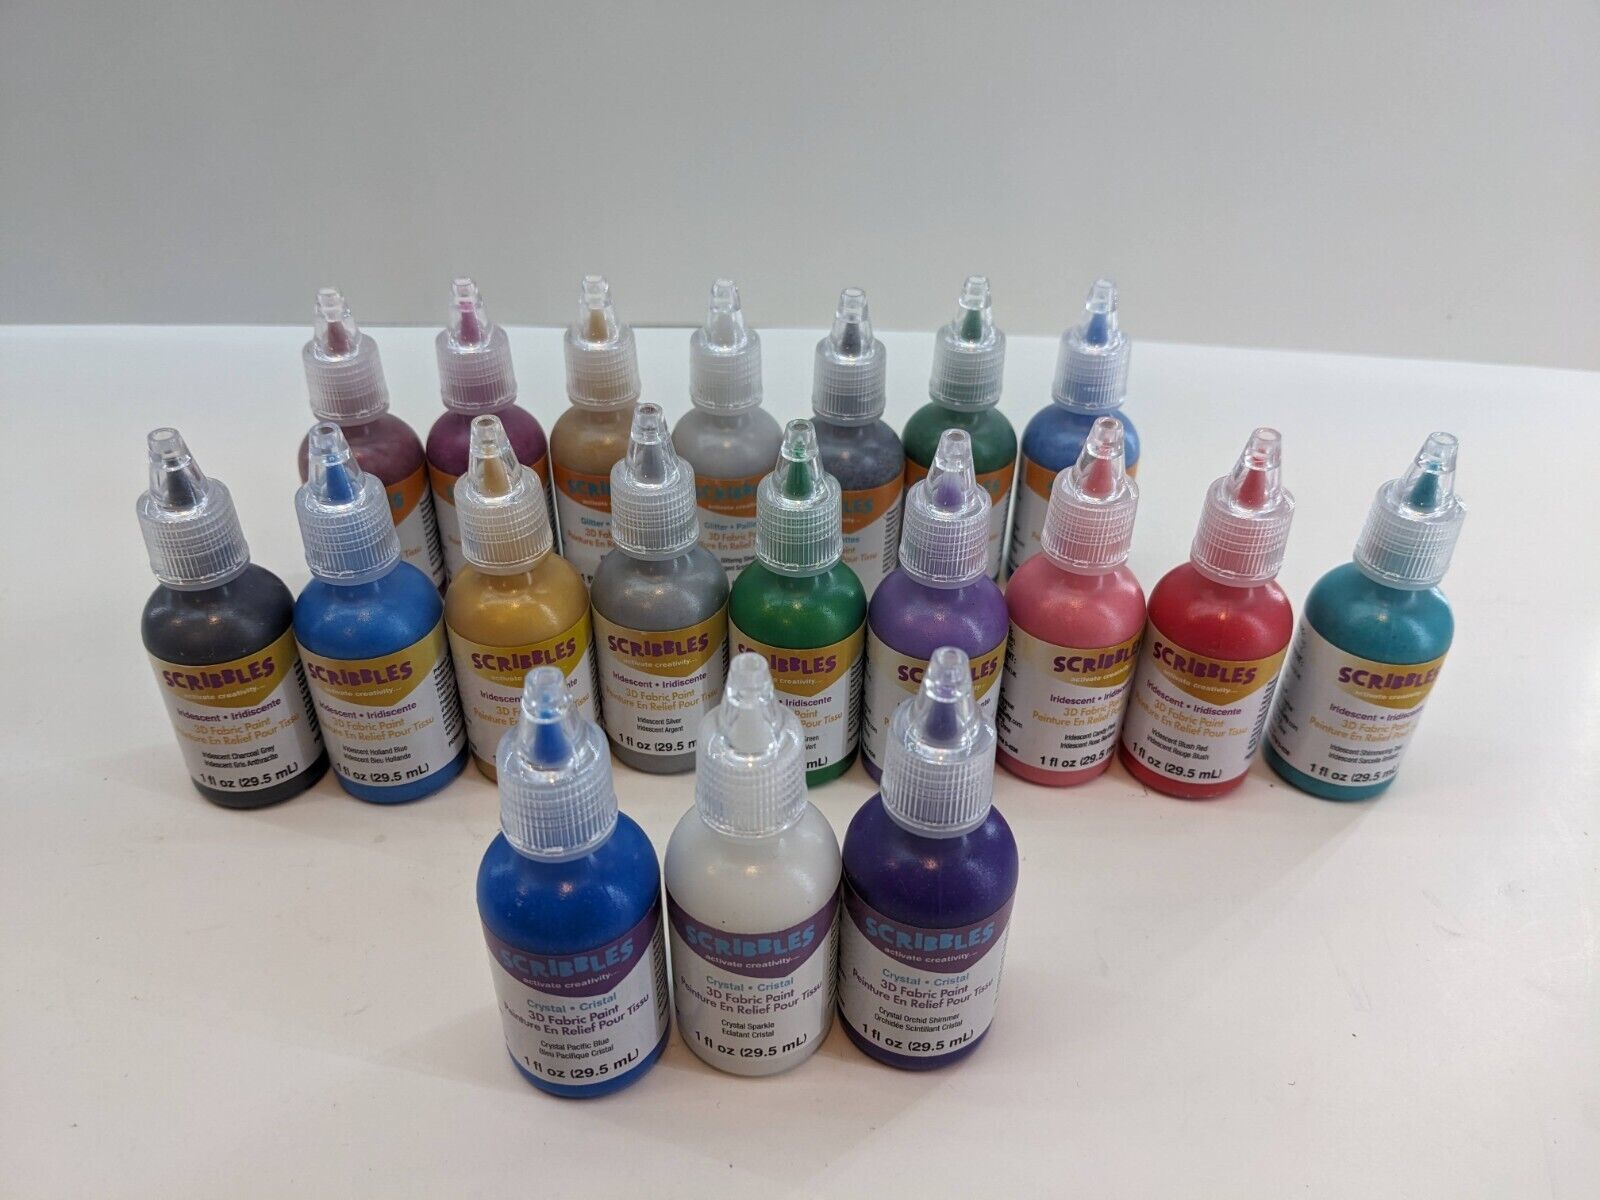 103 Piece Pastel Tie Dye Kit Set for Kids, Adults Paint Party